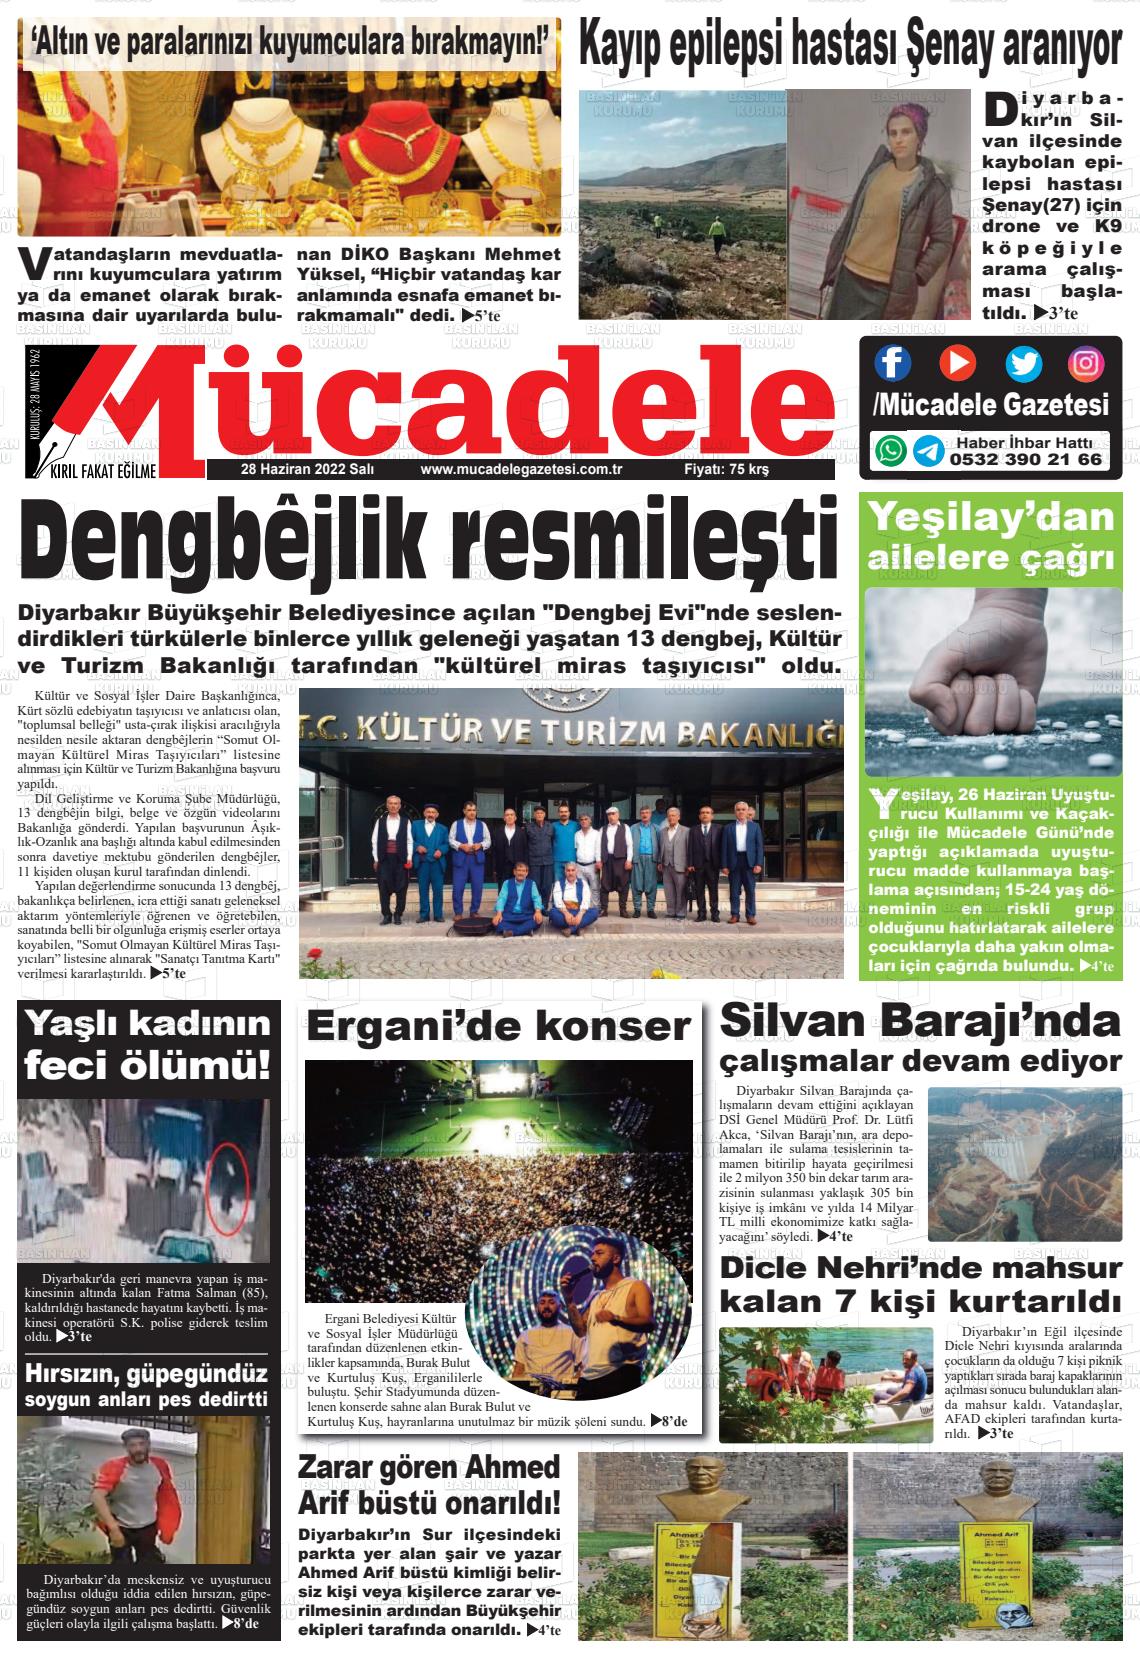 28 Haziran 2022 Mücadele Gazete Manşeti